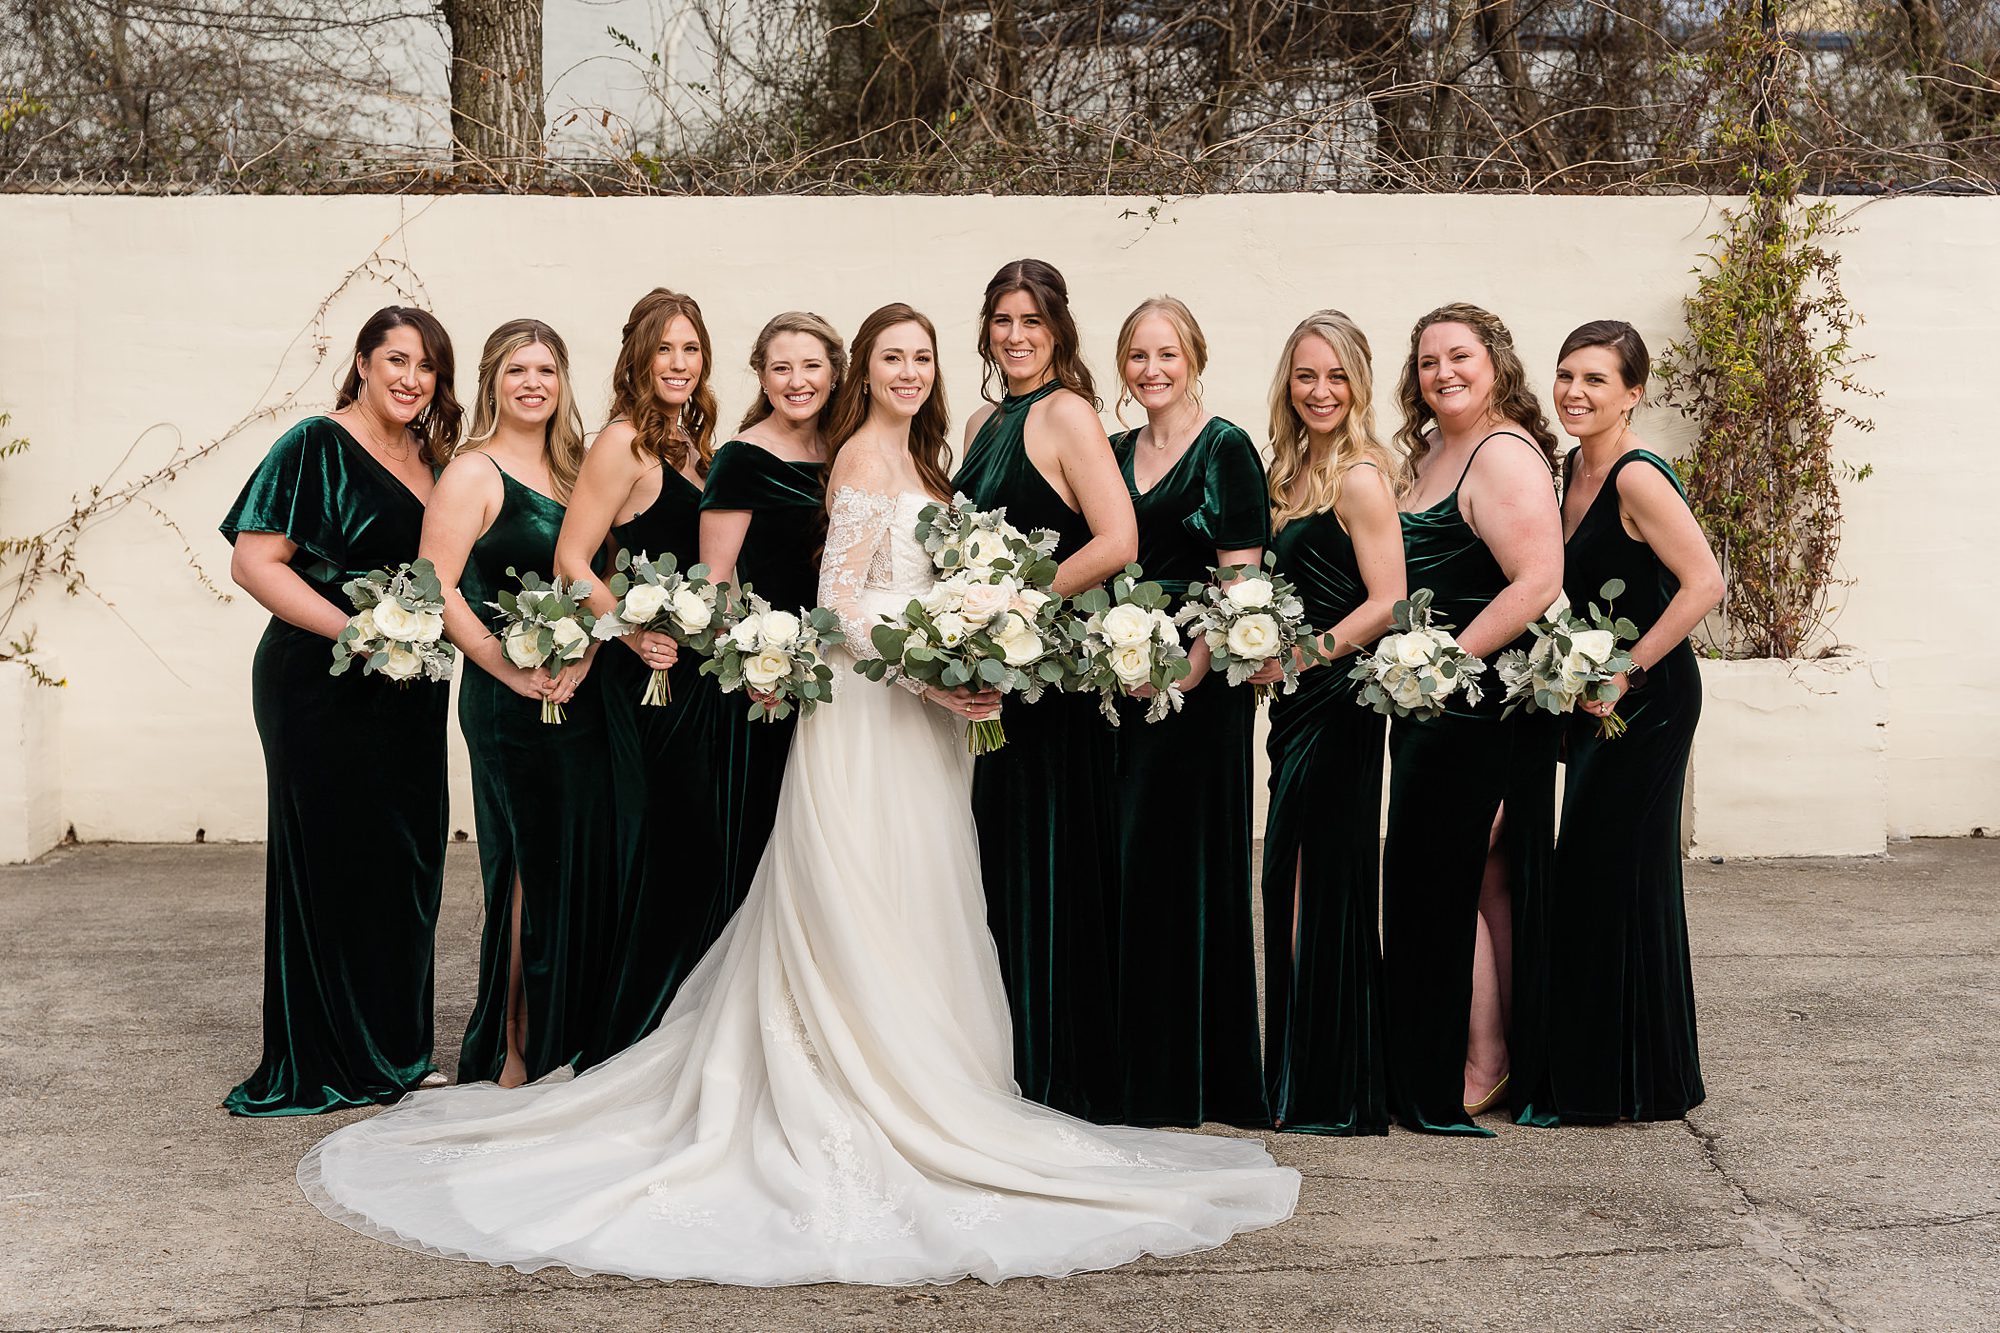 emerald bridesmaids dresses